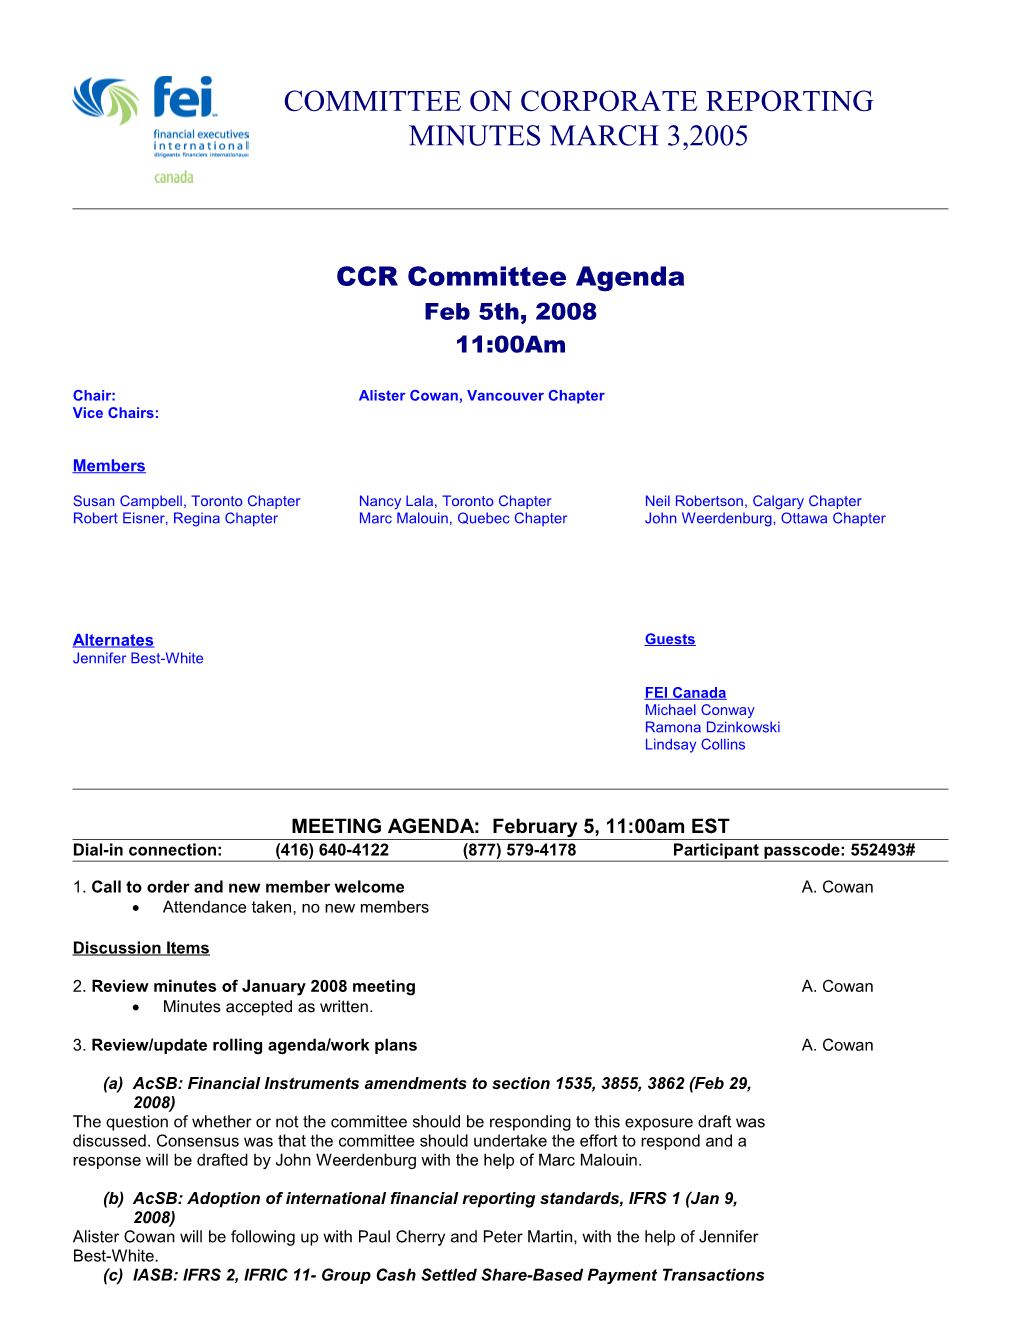 CCR Committee Agenda